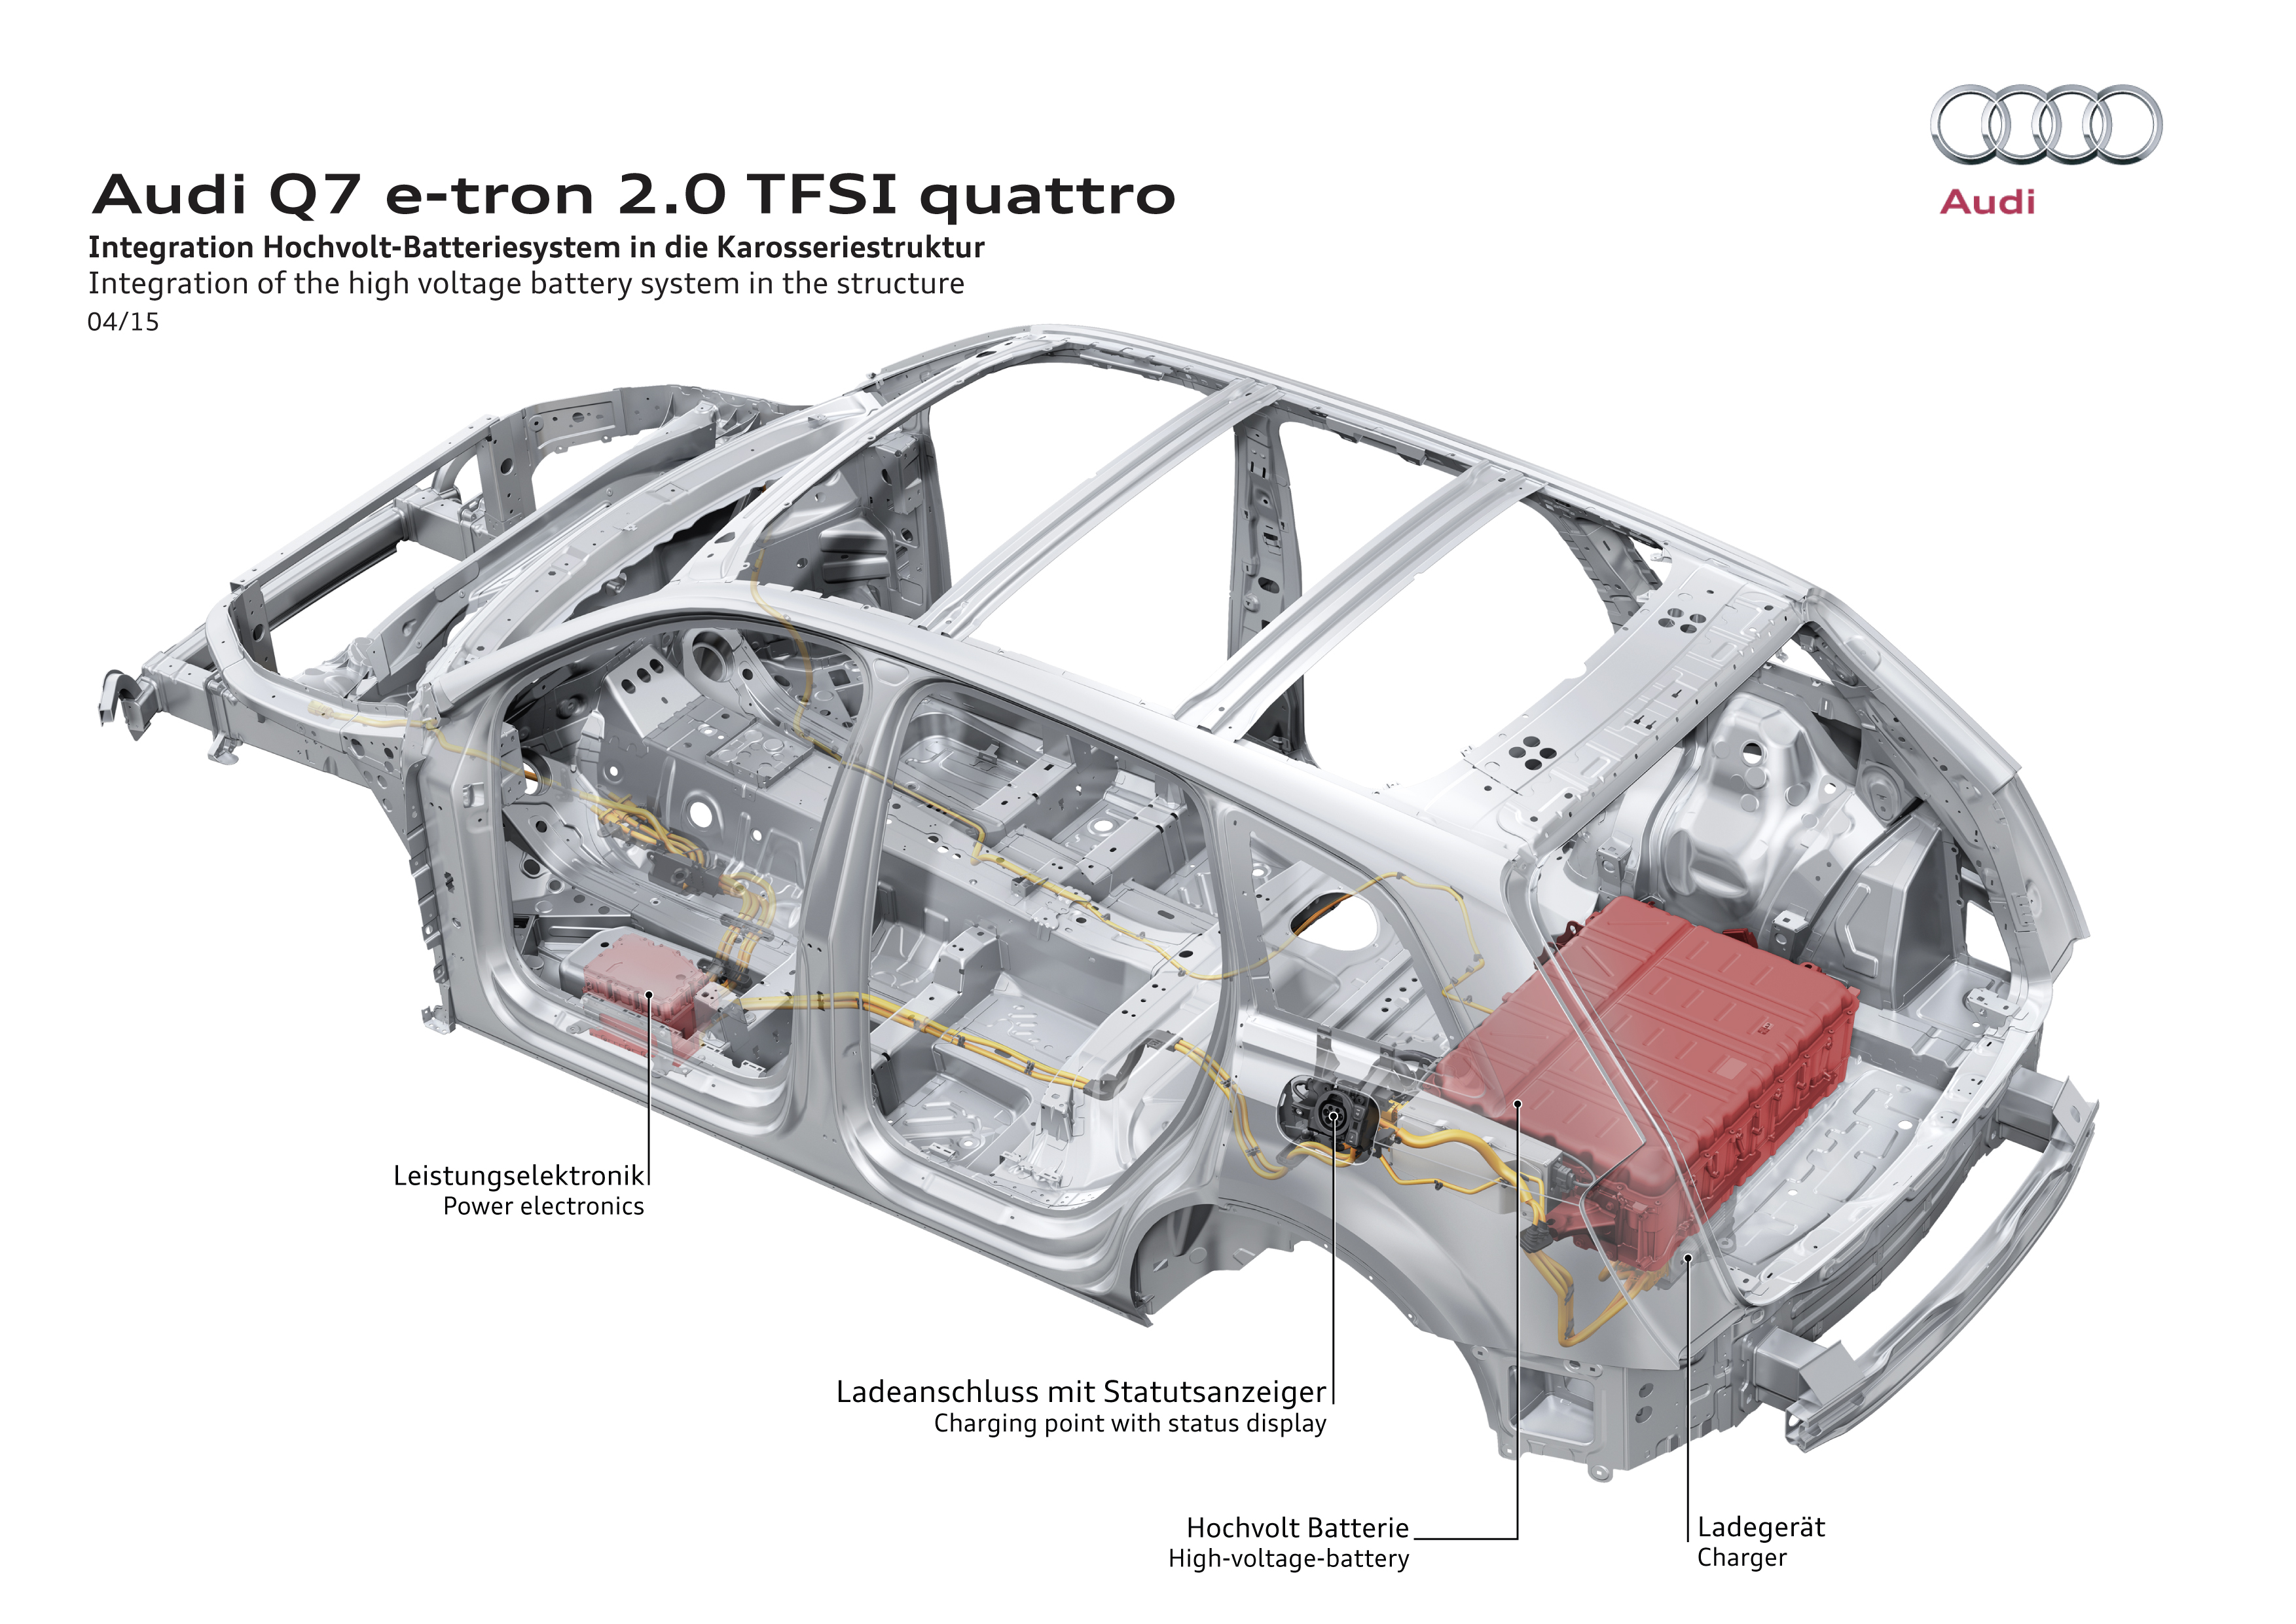 Audi Q7 e-tron 2.0 TFSI quattro - 2015 - battery system structure